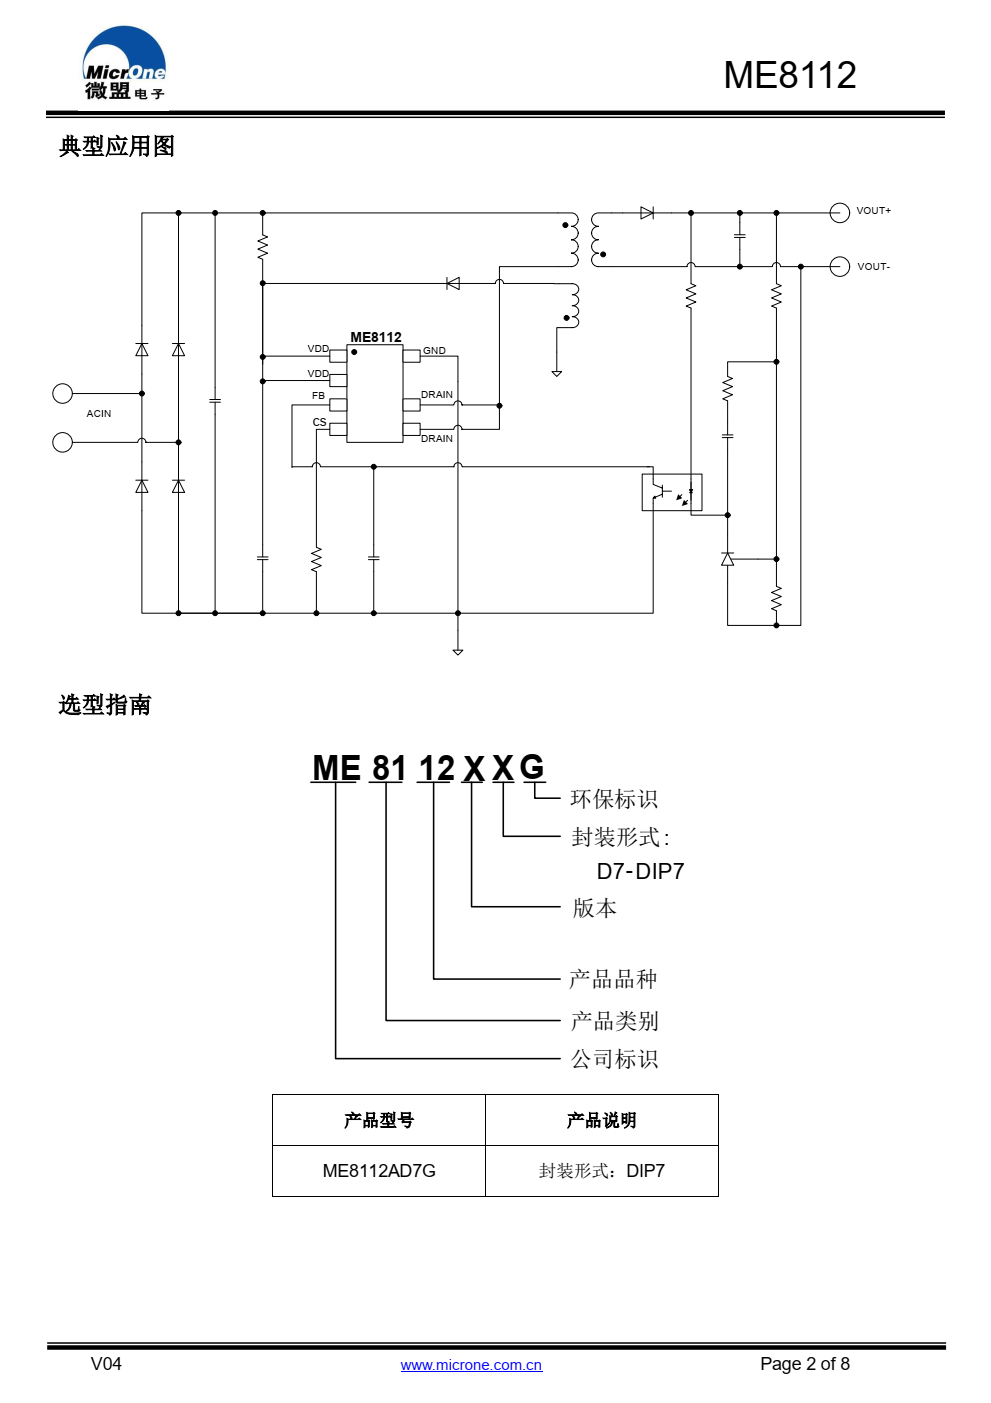 ME8112 是一个高性能电流模式 PWM 控制器，内置 650V/2A 功率 MOSFET